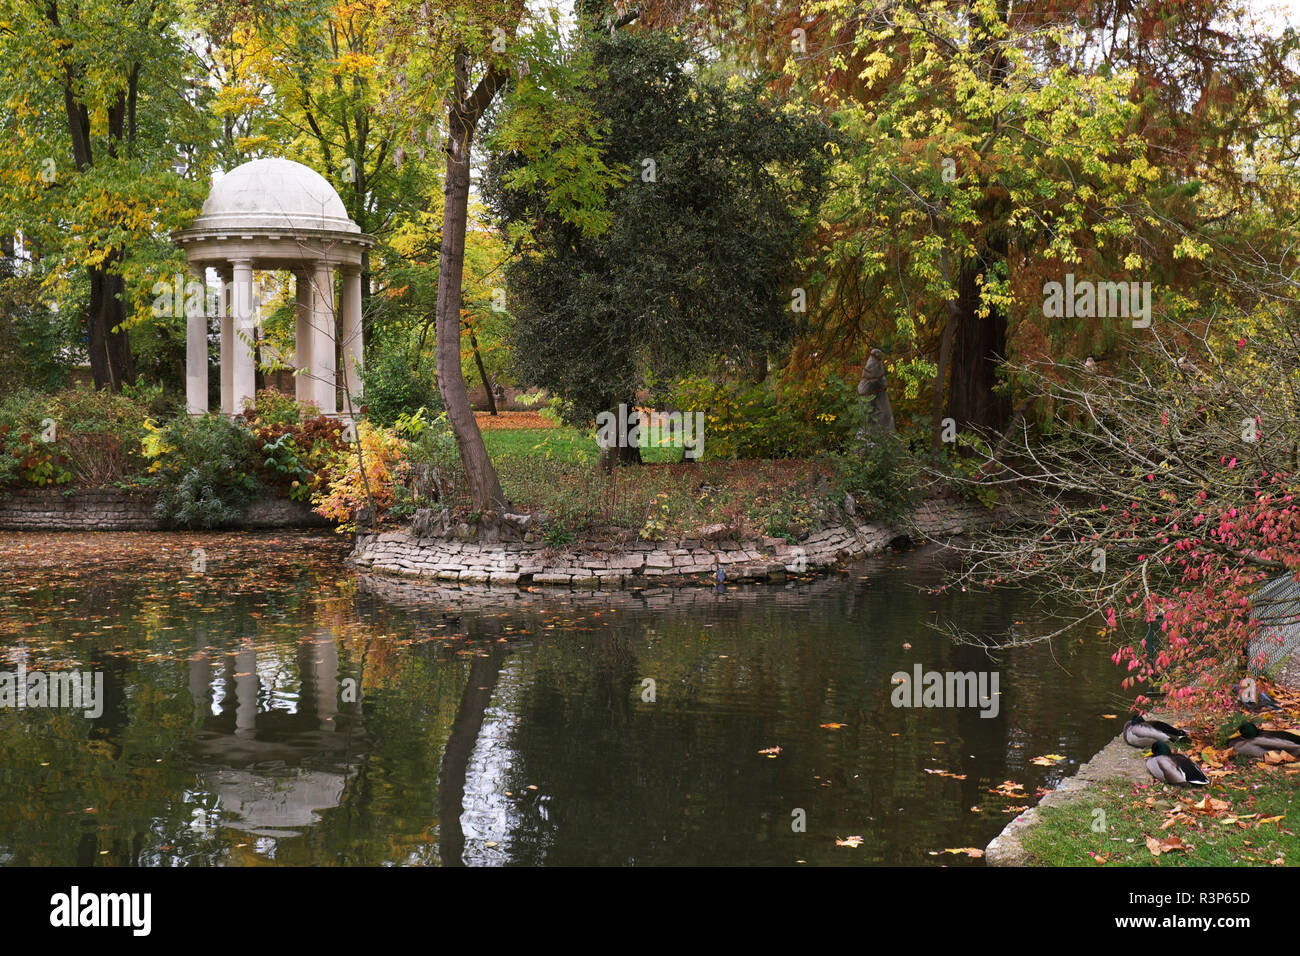 The Raines Creek, Temple of Love, Science Garden, botanical garden,  Arquebuse Park, Dijon, Cote d Or, France Stock Photo - Alamy